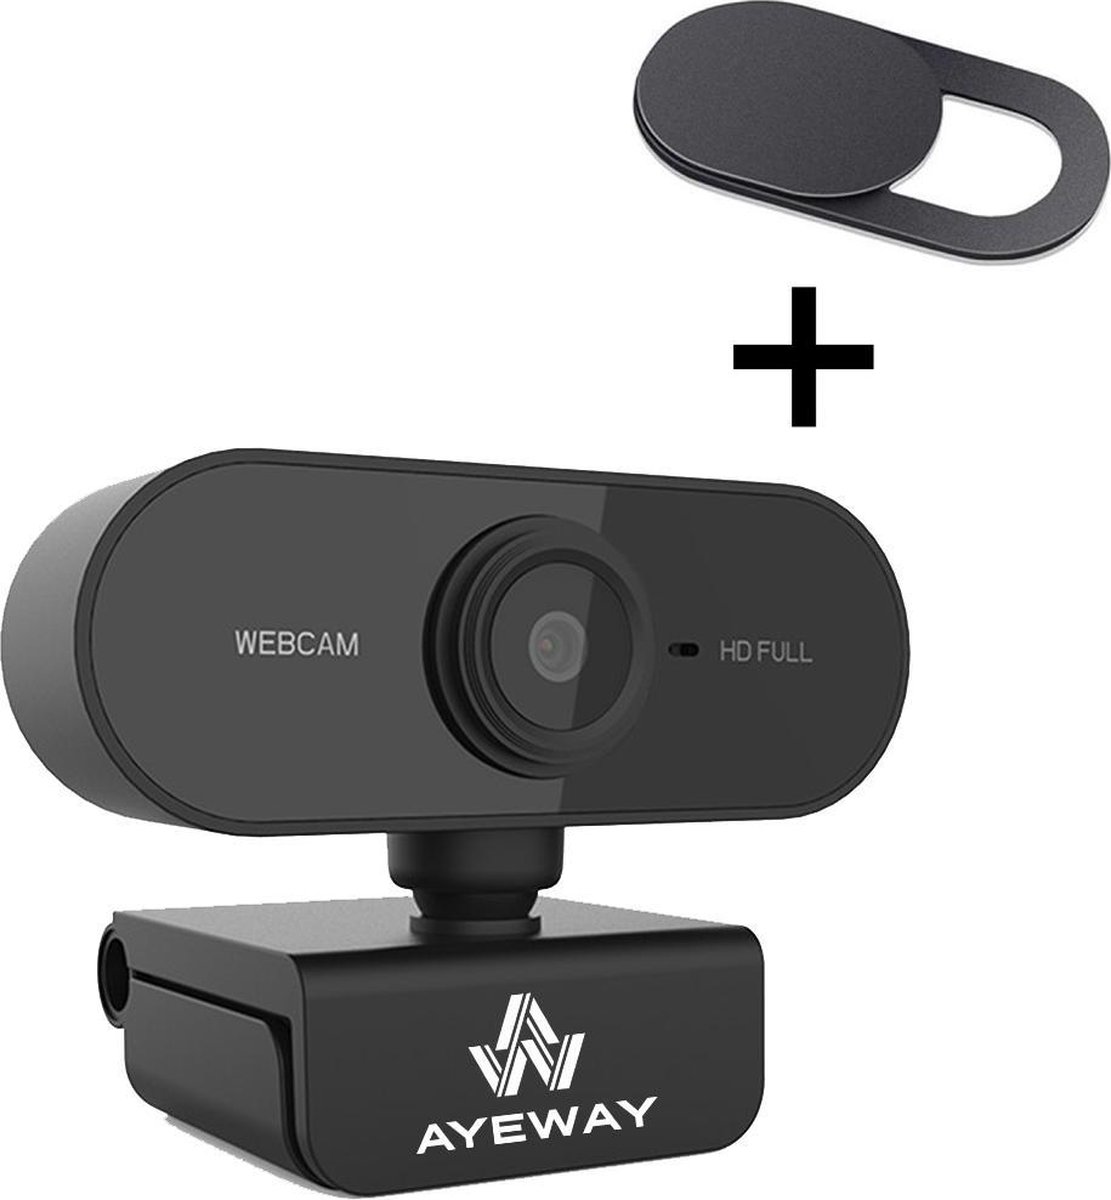 AyeWay Professionele Full HD Webcam - Inclusief Gratis Webcam Cover - Webcam voor PC - Microfoon - Werk & Thuis - Windows & Mac